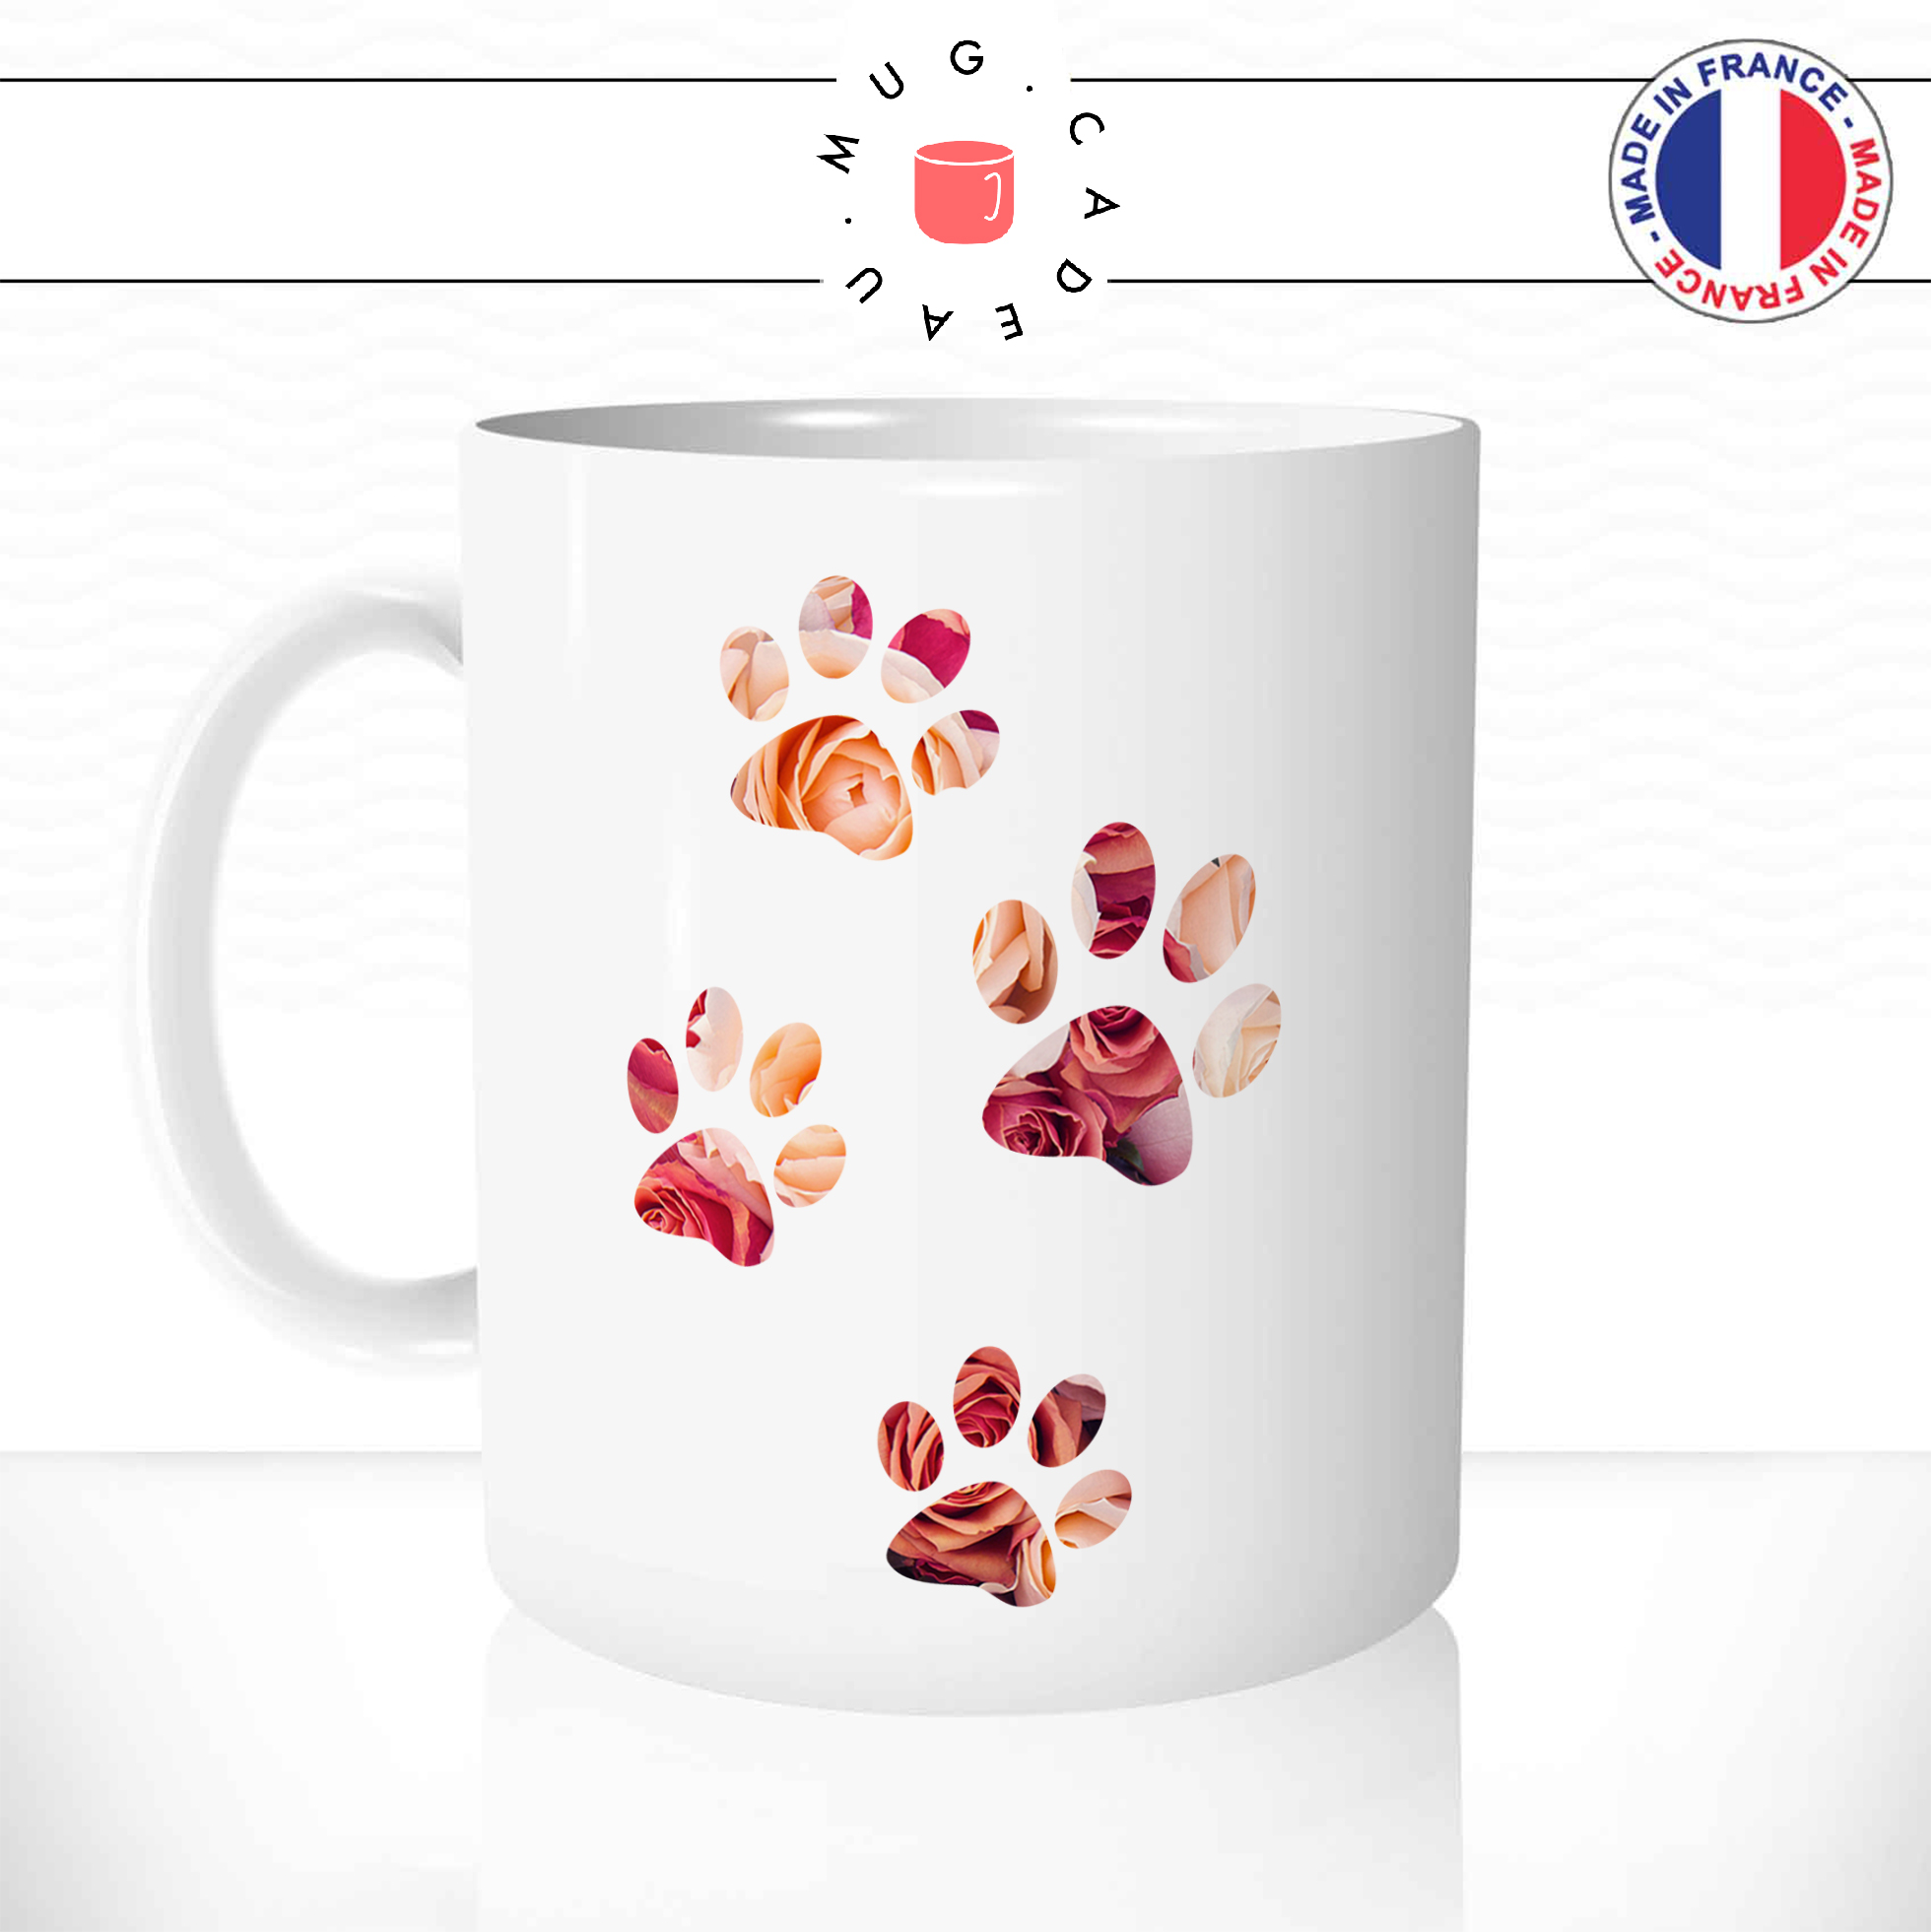 mug-tasse-ref29-chat-pattes-fleurs-cafe-the-mugs-tasses-personnalise-anse-gauche